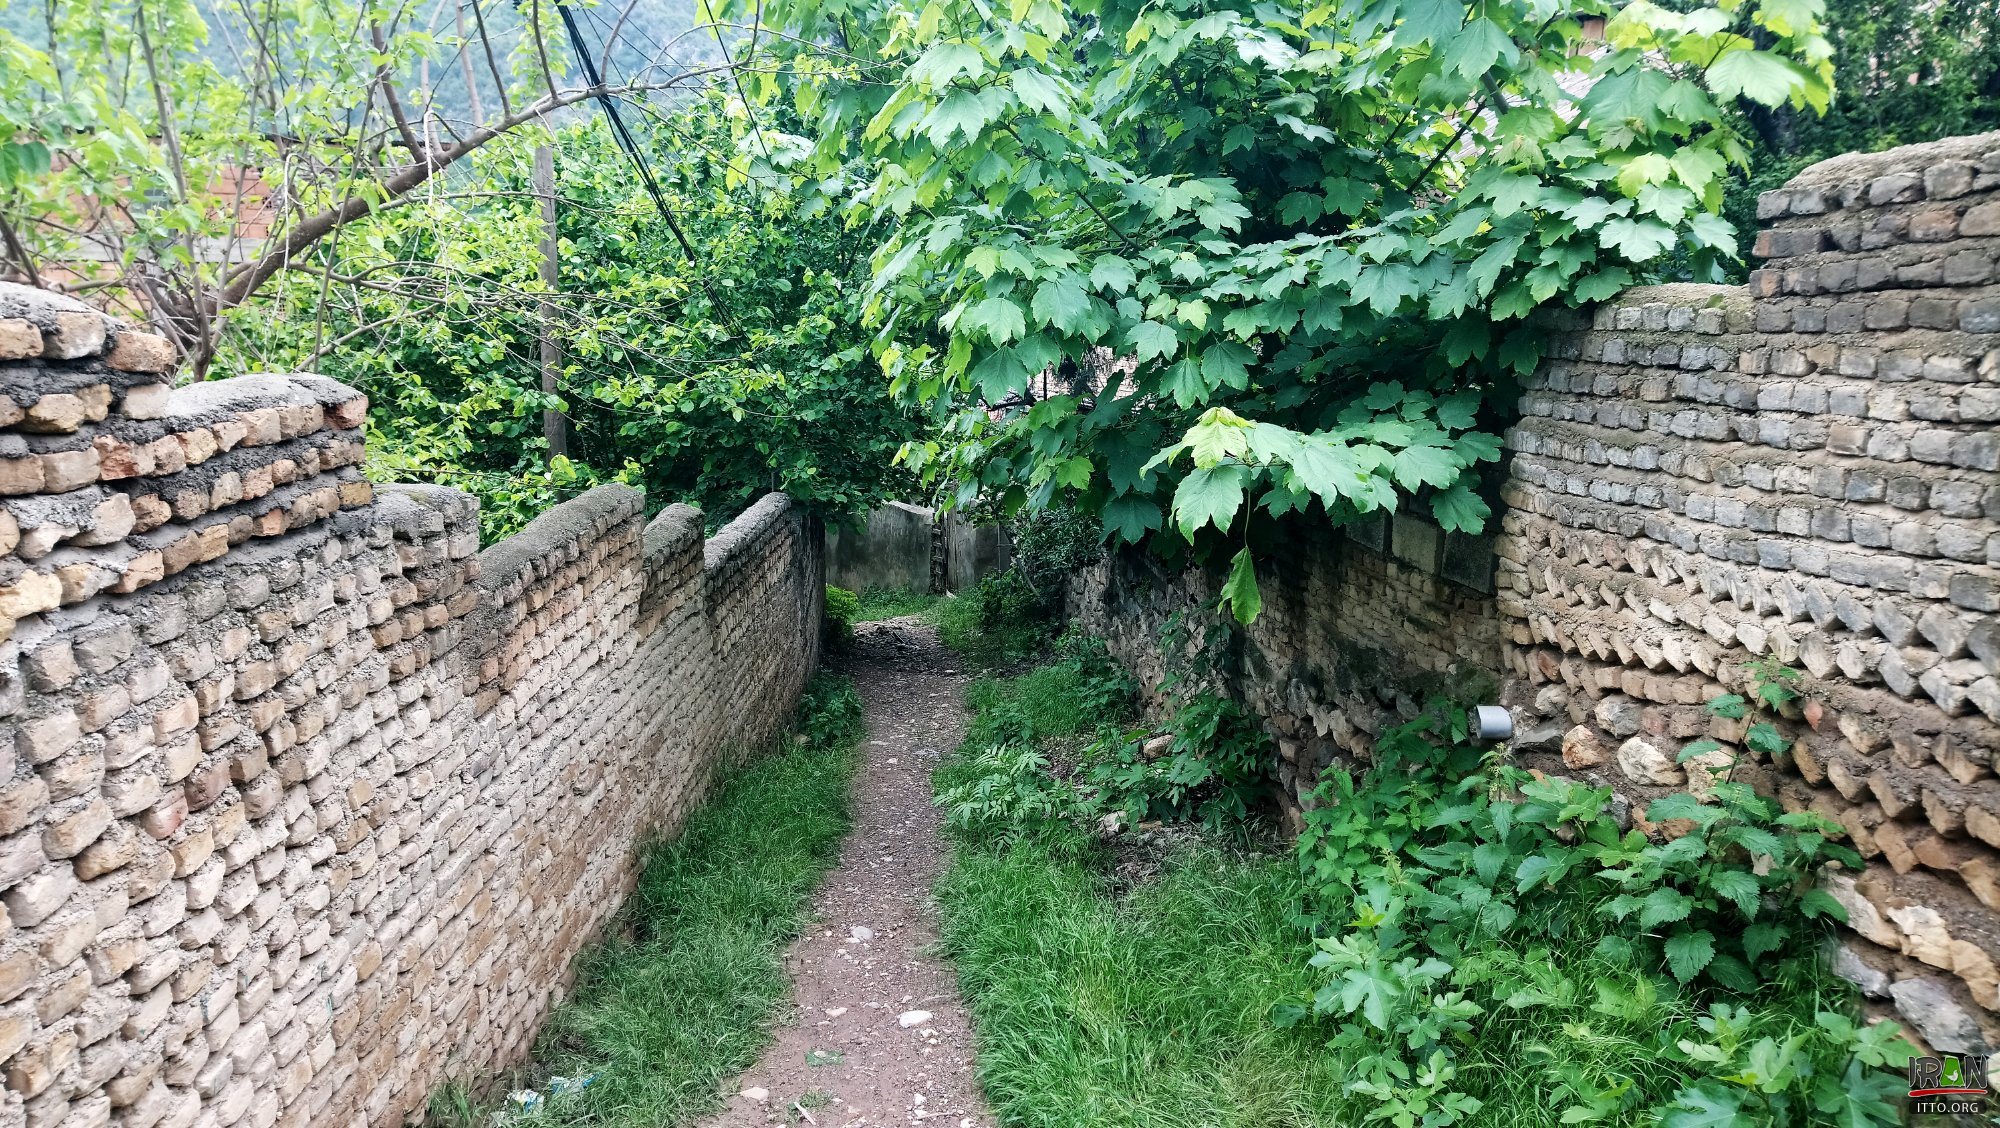 ziyarat.jpeg,Ziarat Village,Zeiarat Village,روستای زیارت,gorgan,گرگان